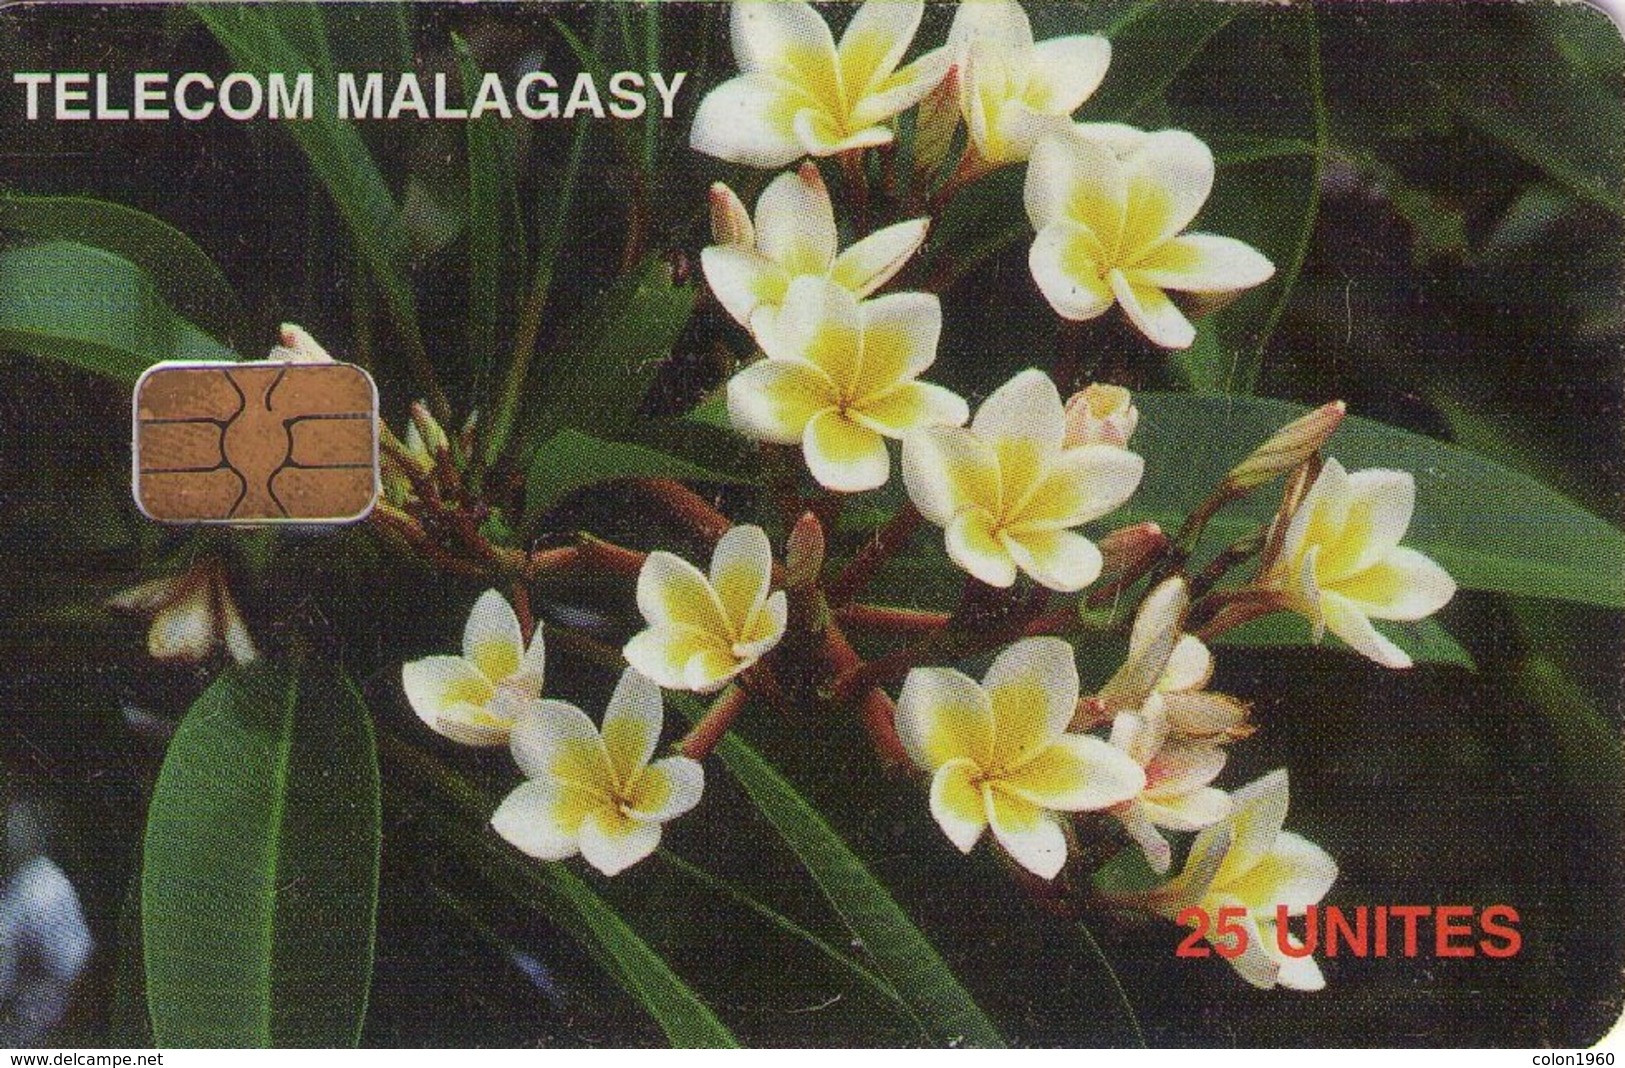 MADAGASCAR. MDG-47. Frangipanier Flowers. (012) - Madagascar